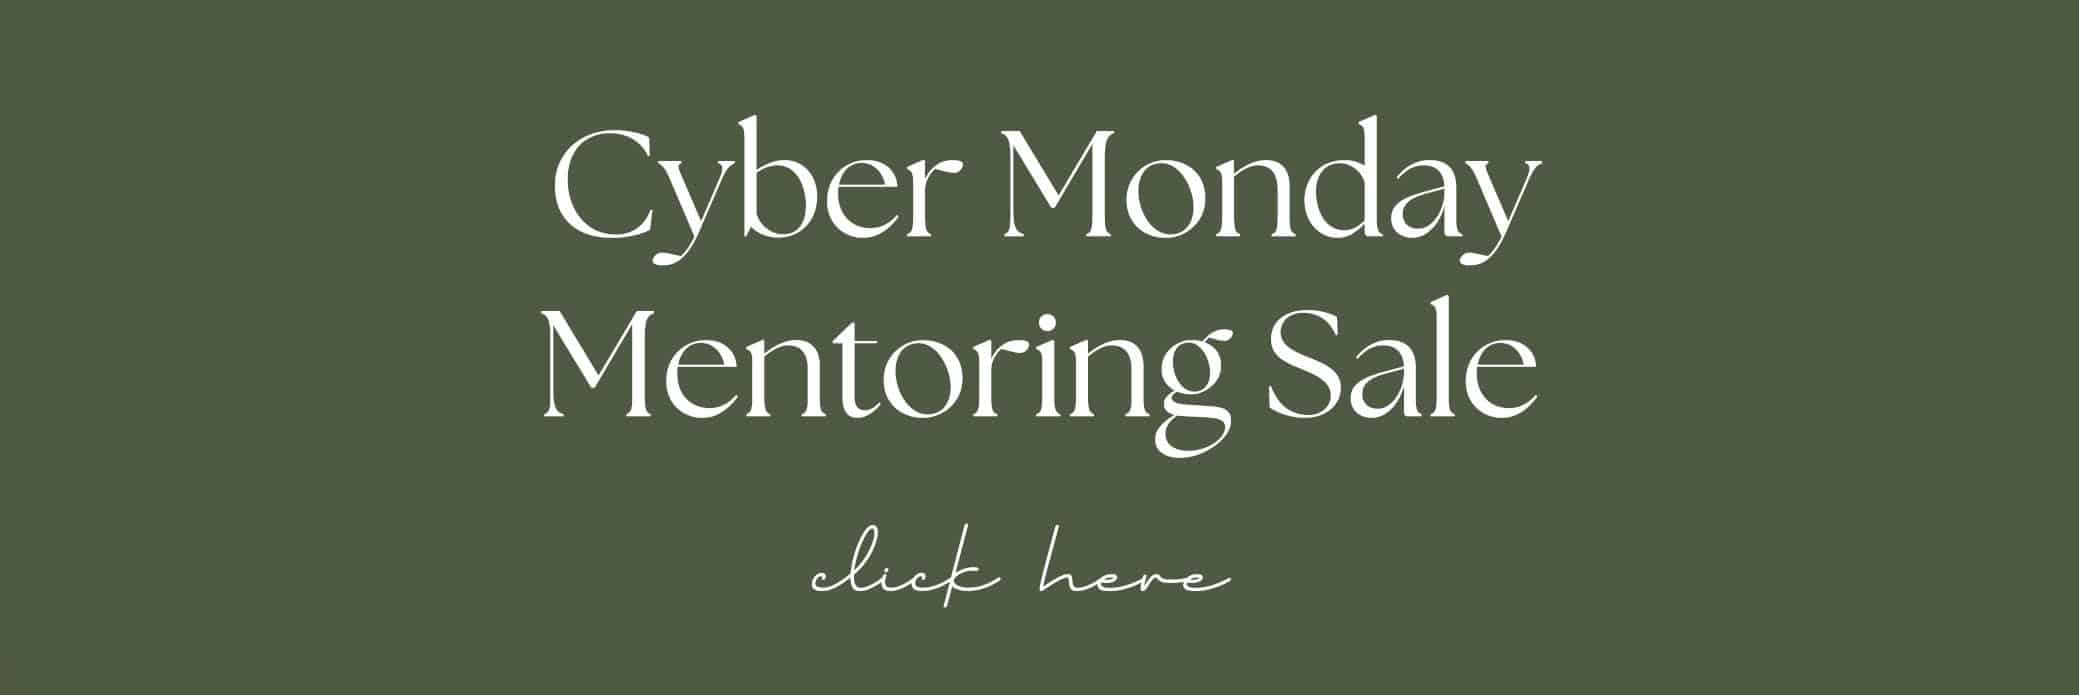 cyber monday mentoring